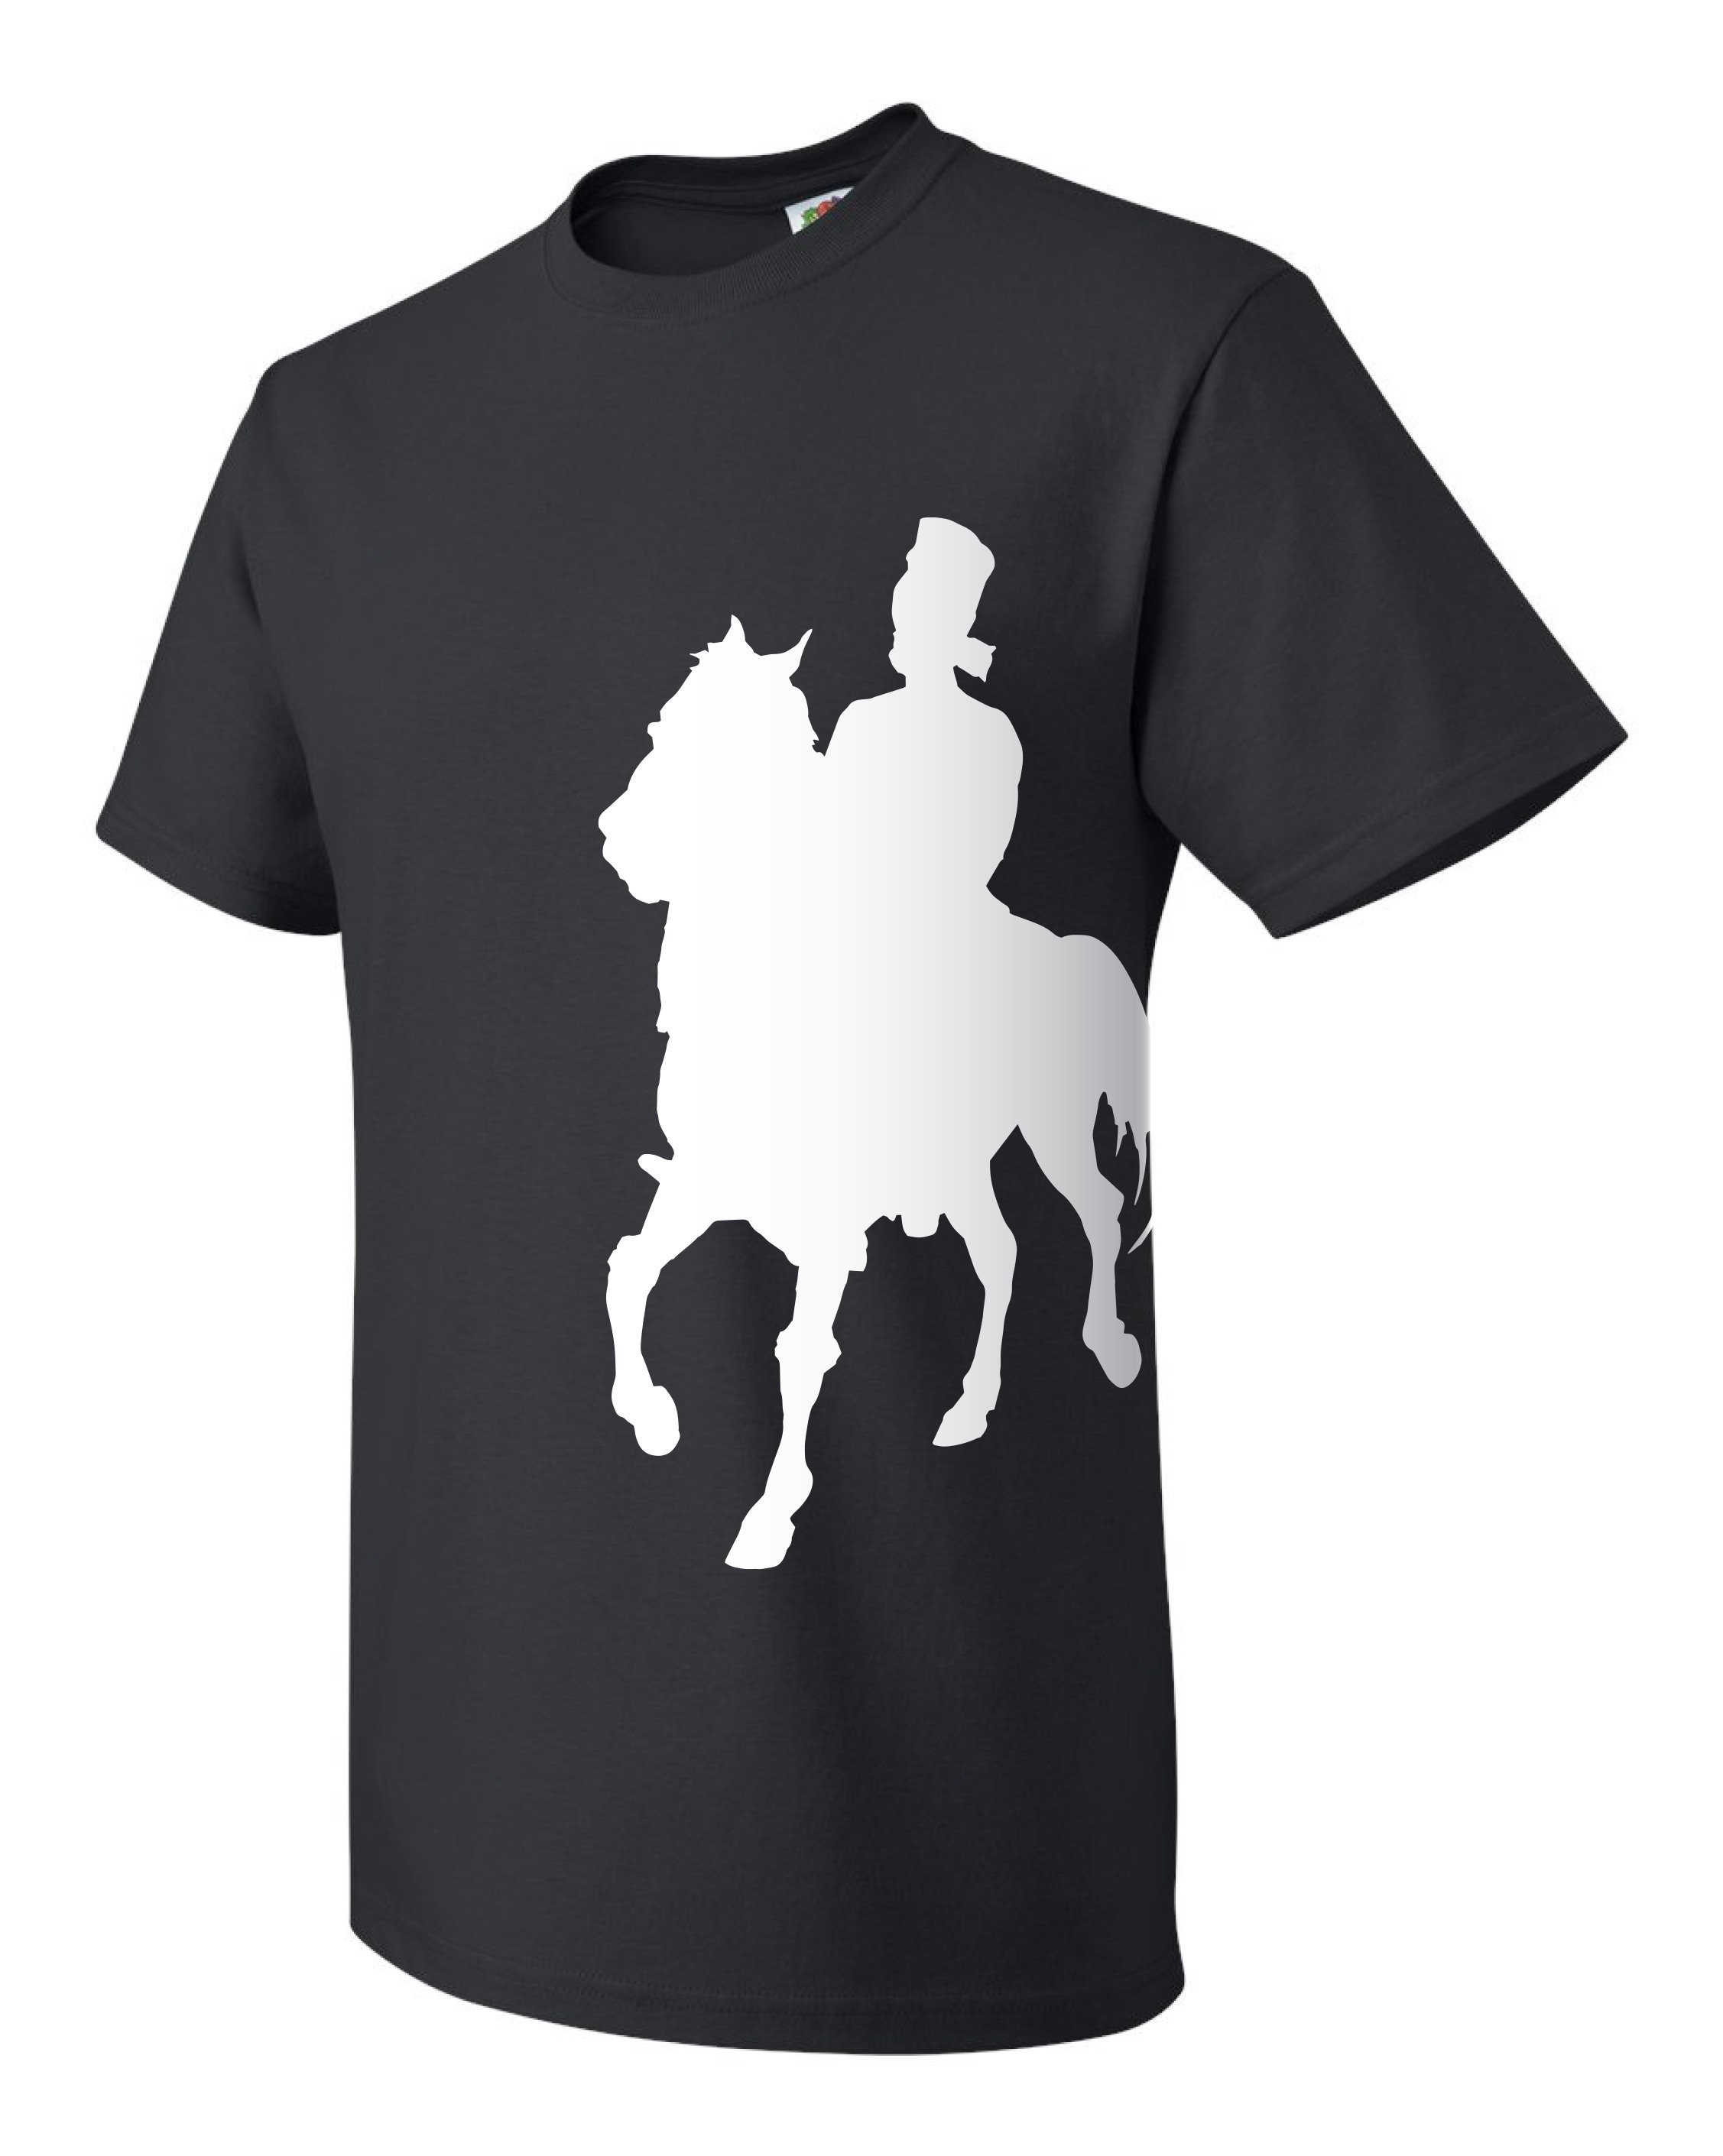 UN_Horse-SidePrint_T-Shirts-B.jpg